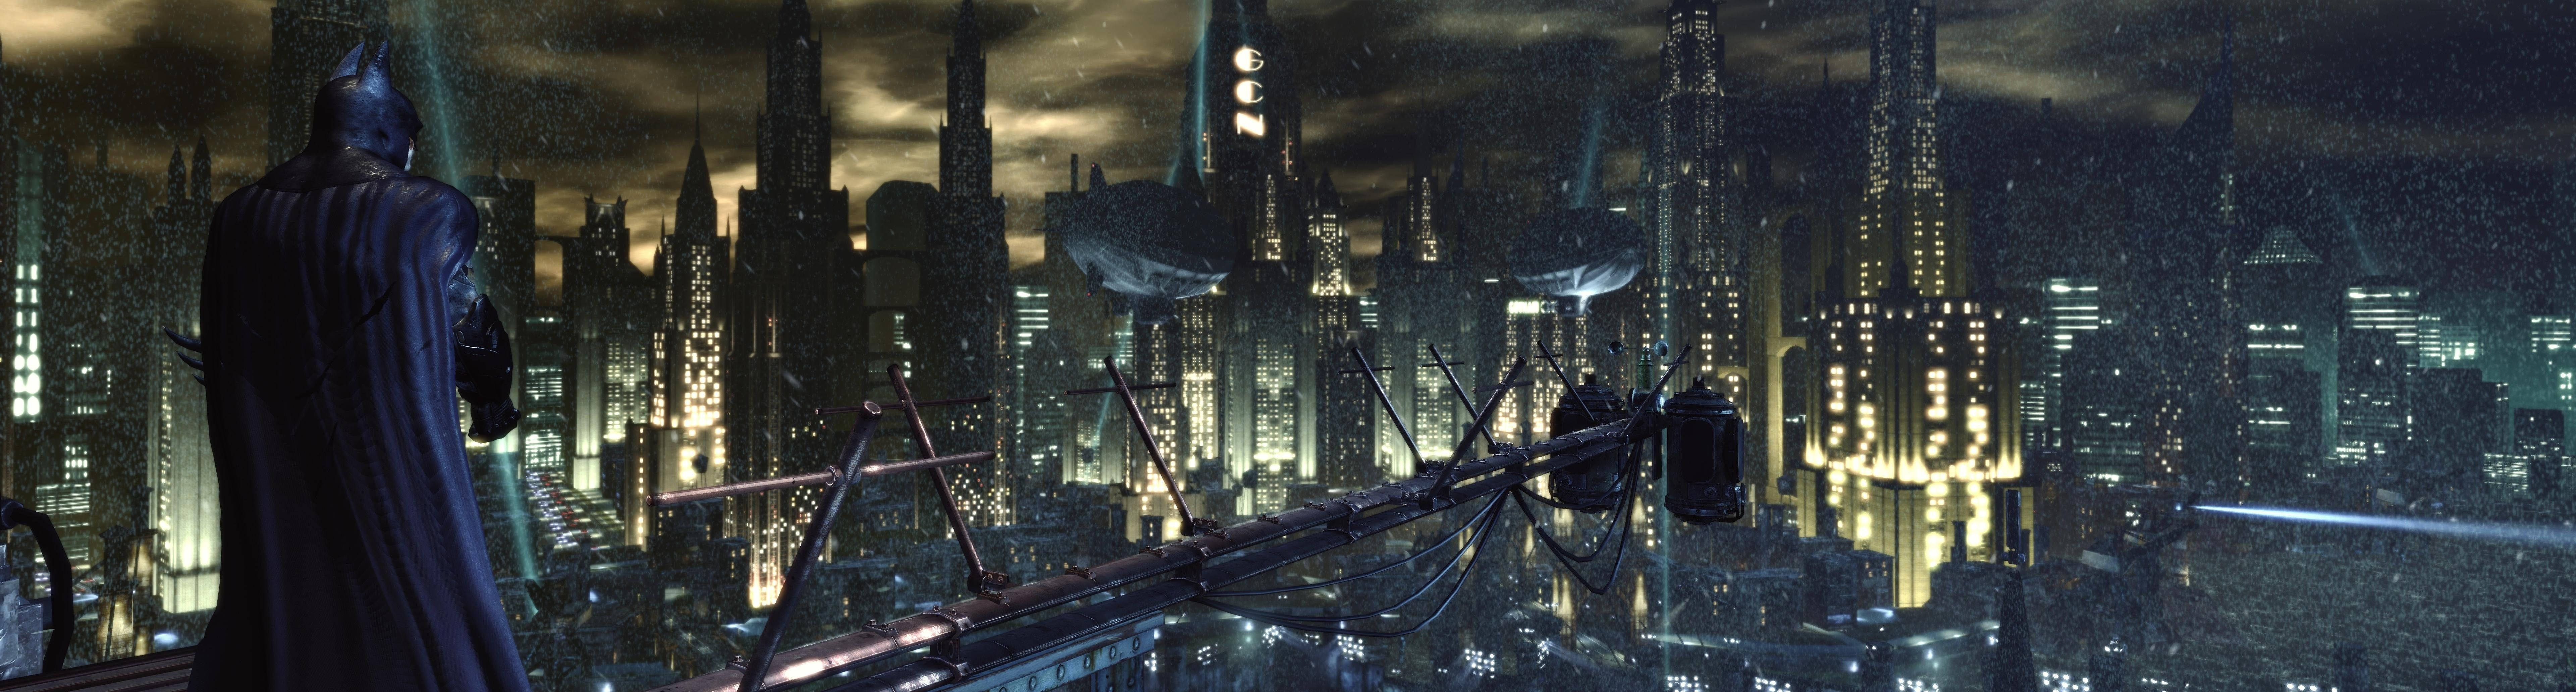 4K Dual Monitor Batman Overlooking Gotham City Wallpaper